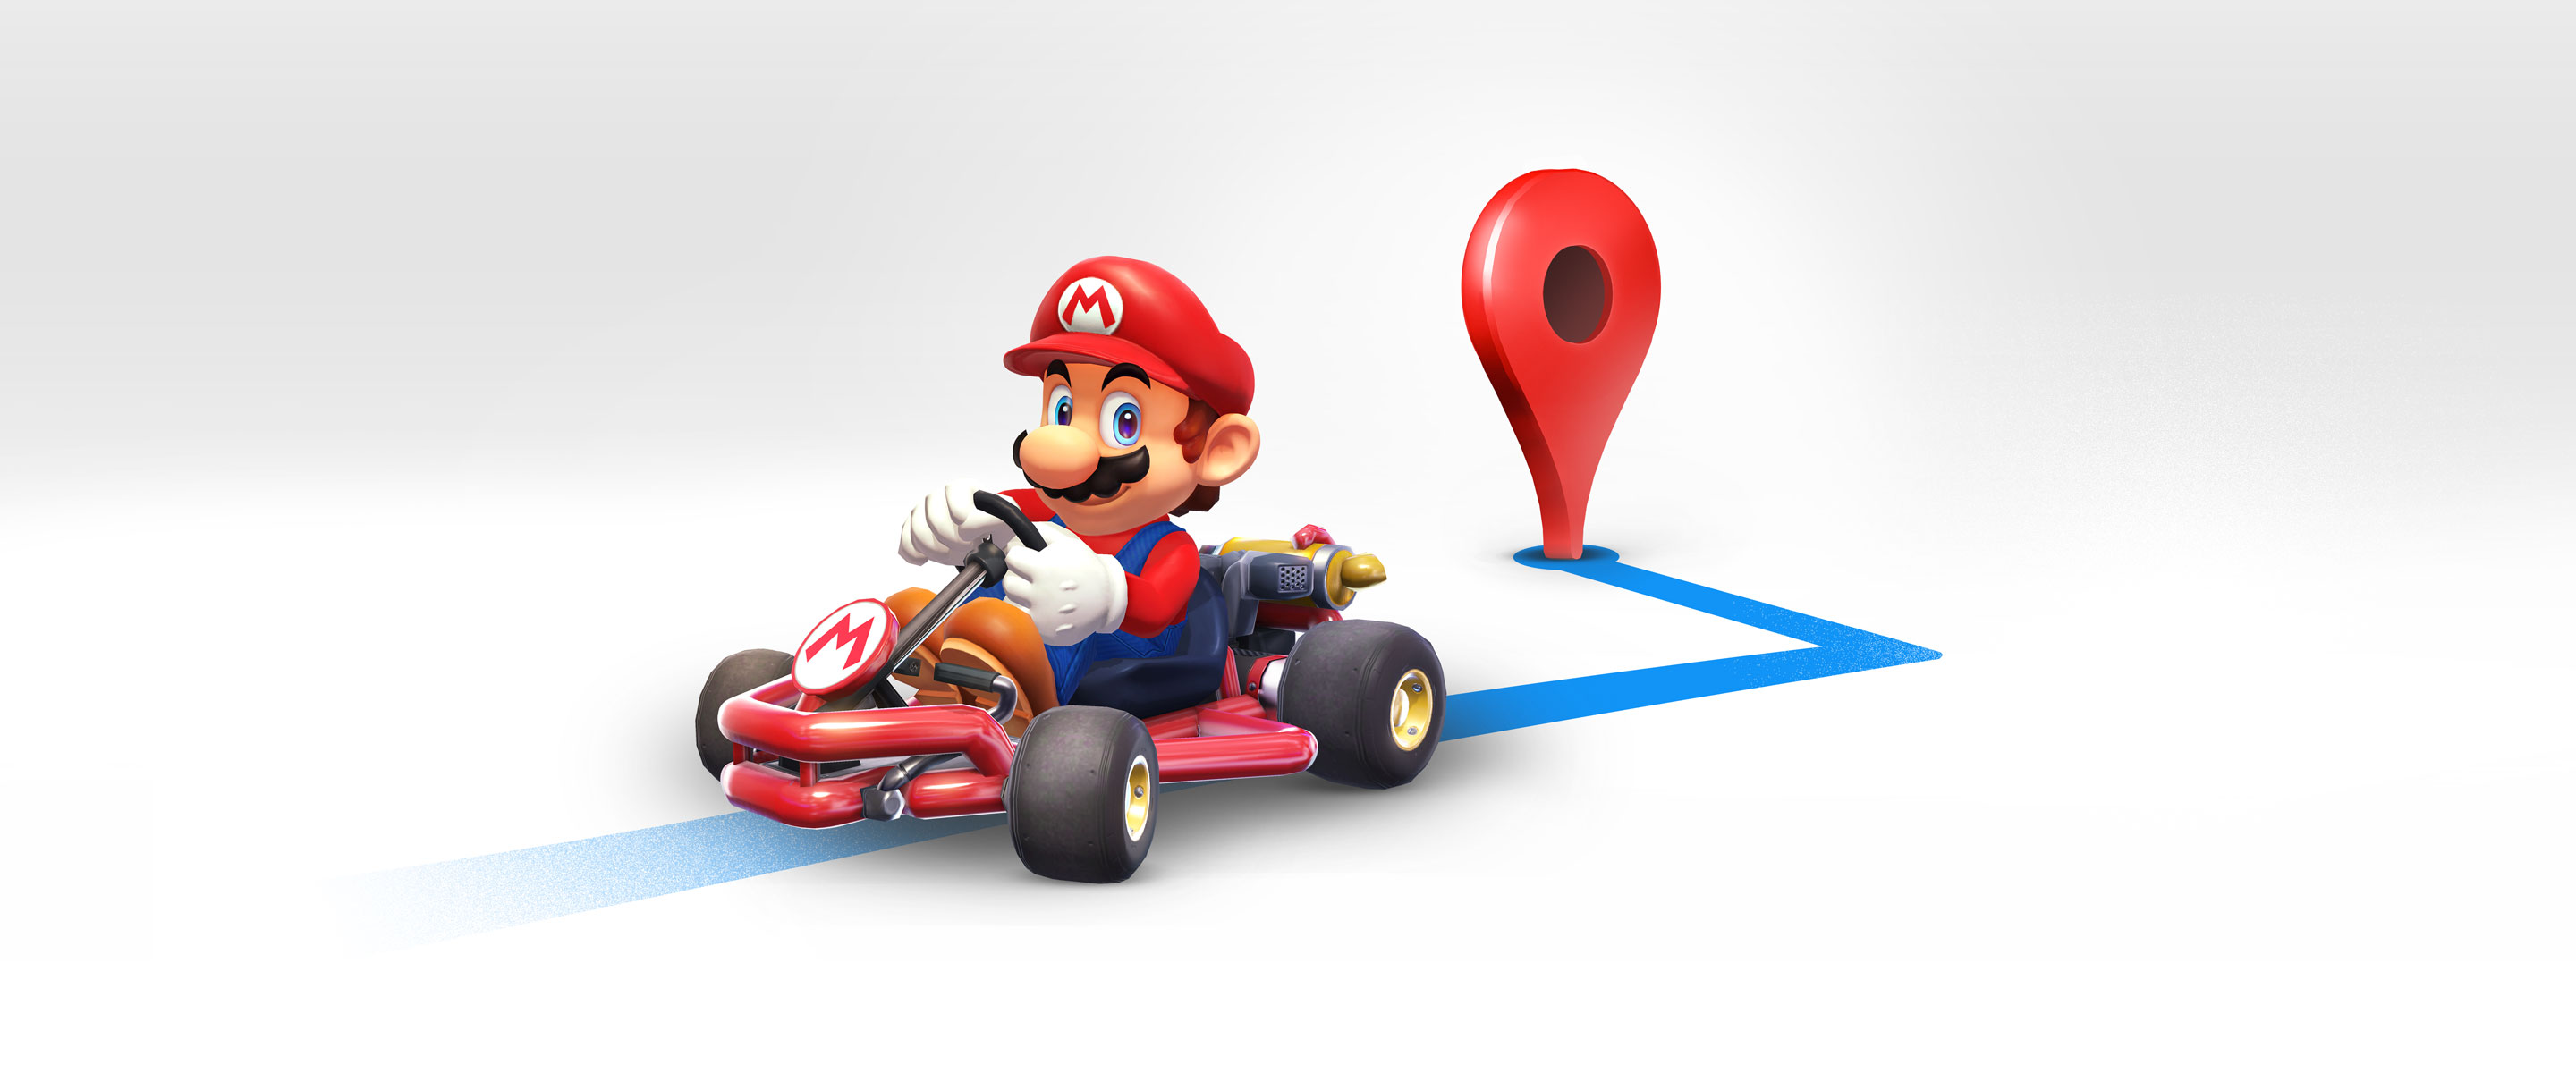 Super Mario on the move for Google.com